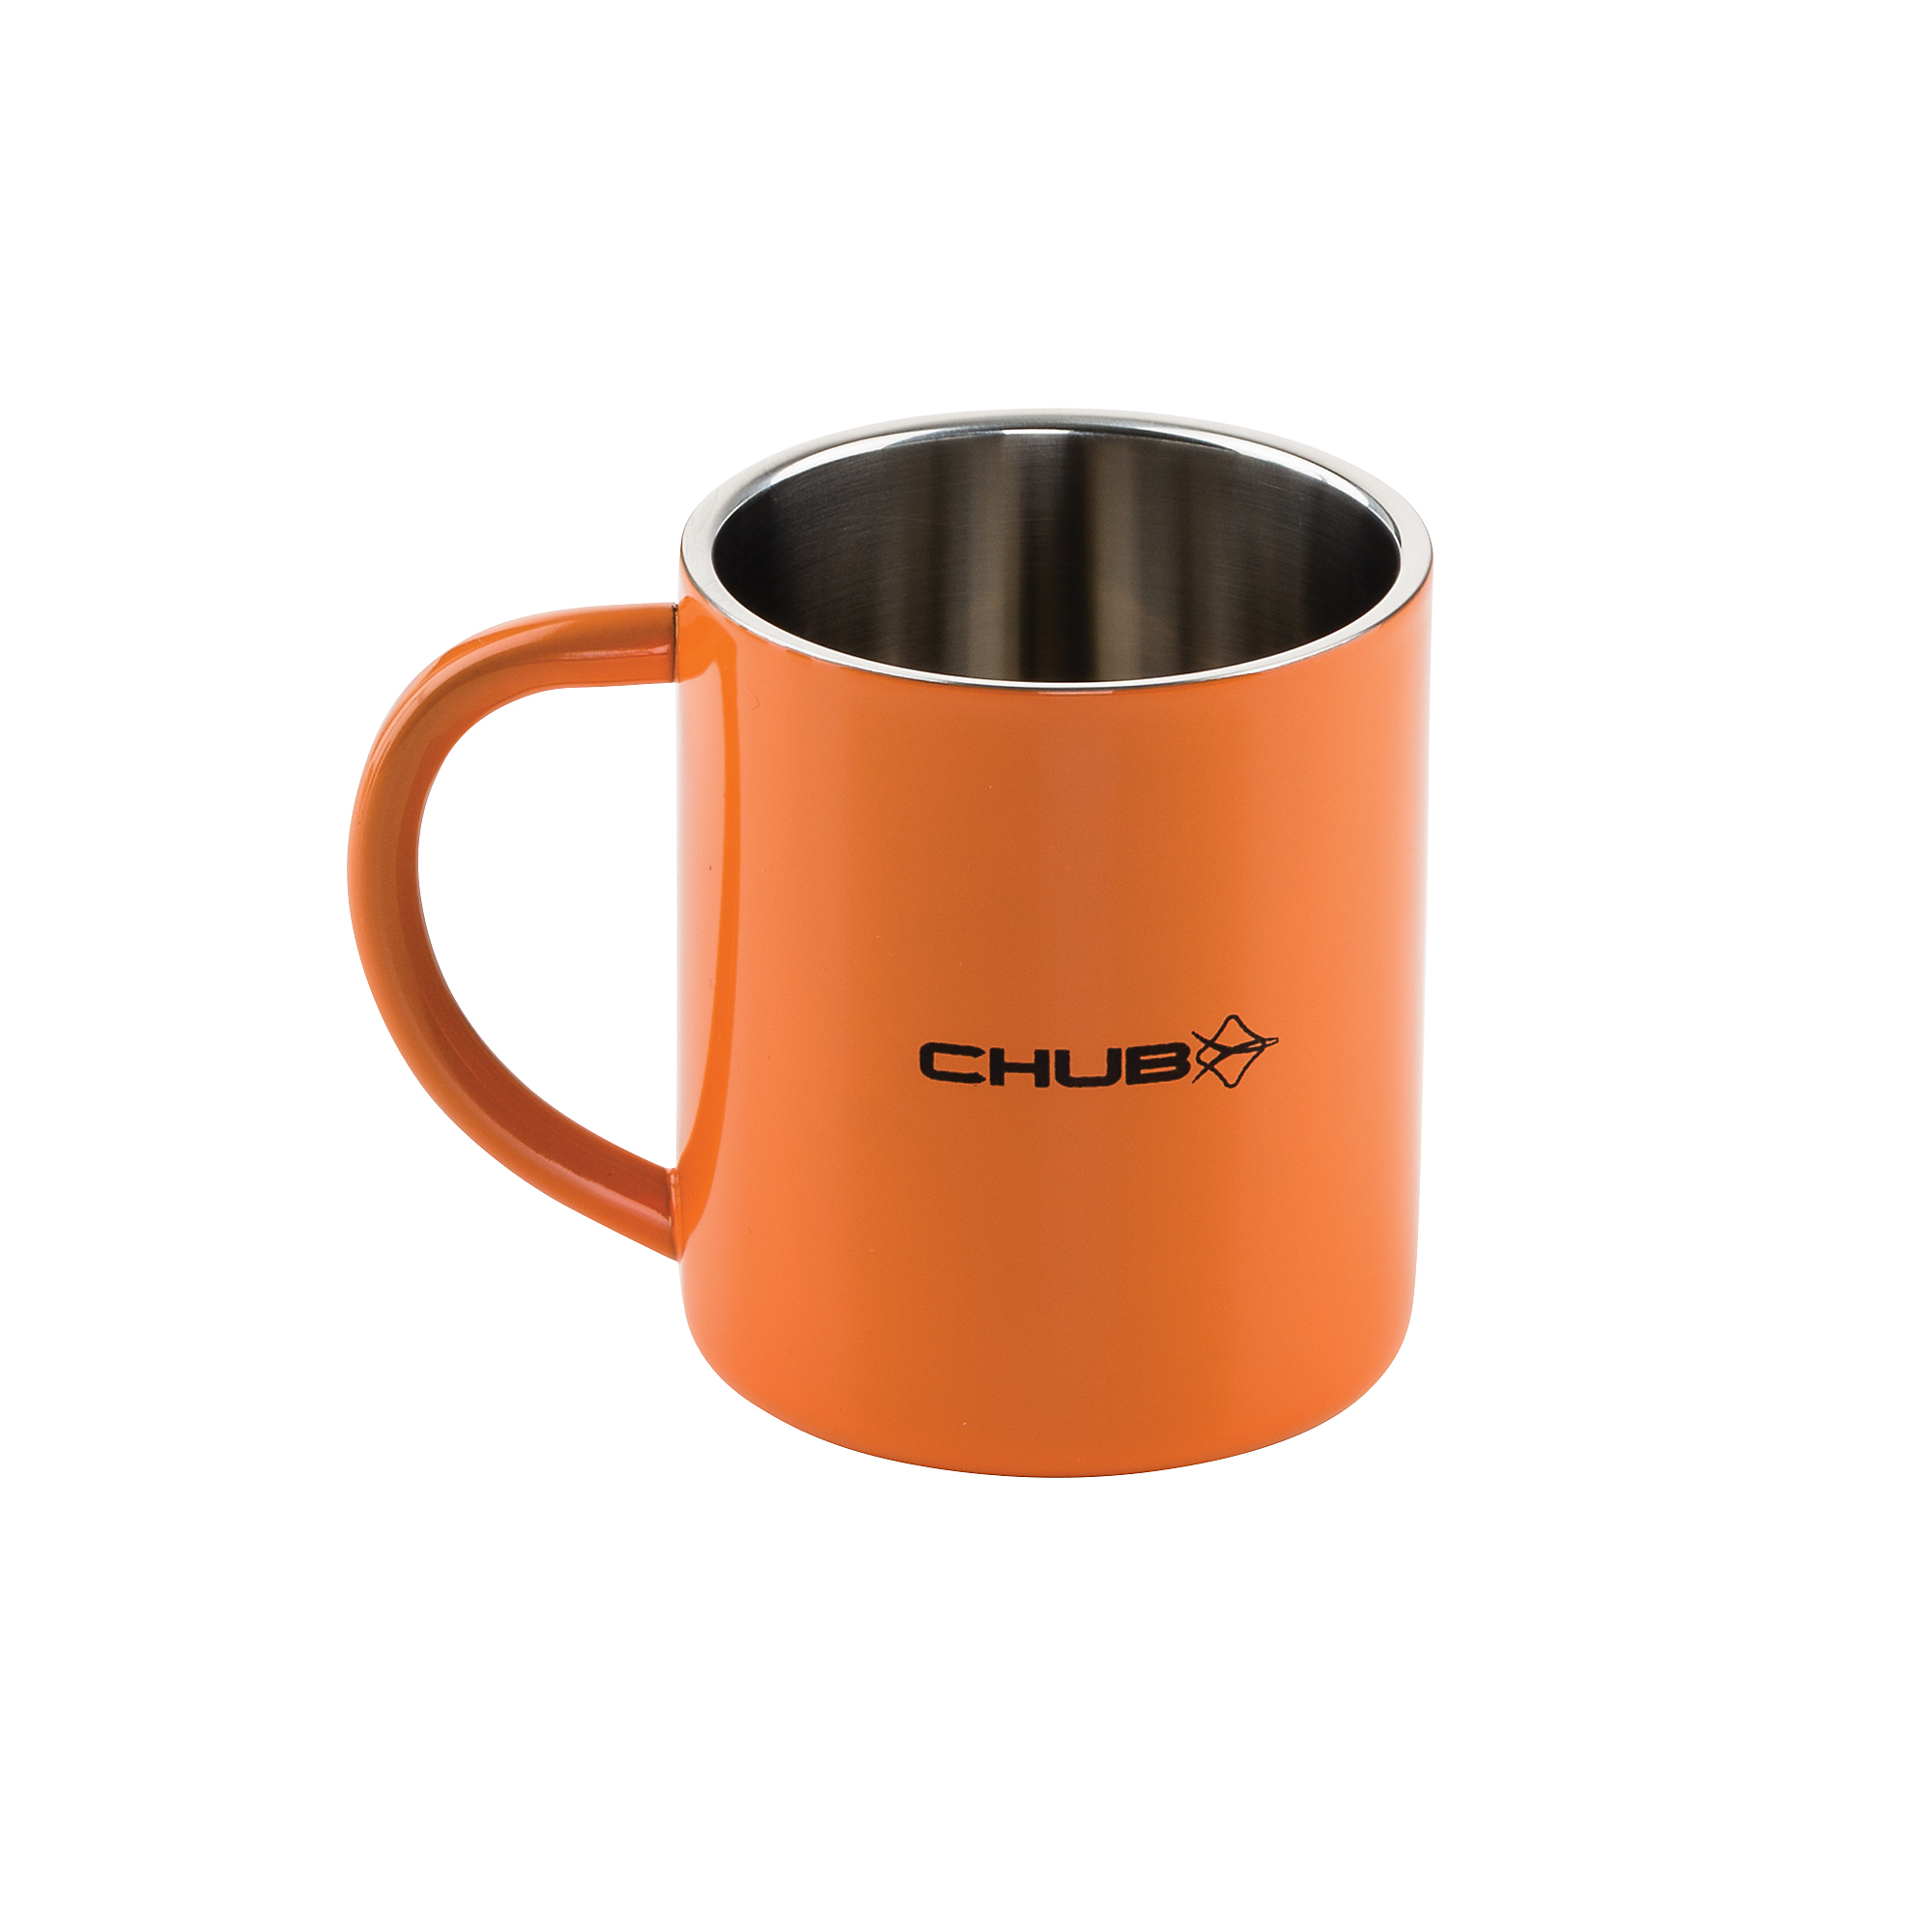 Chub Stainless Steel Mug